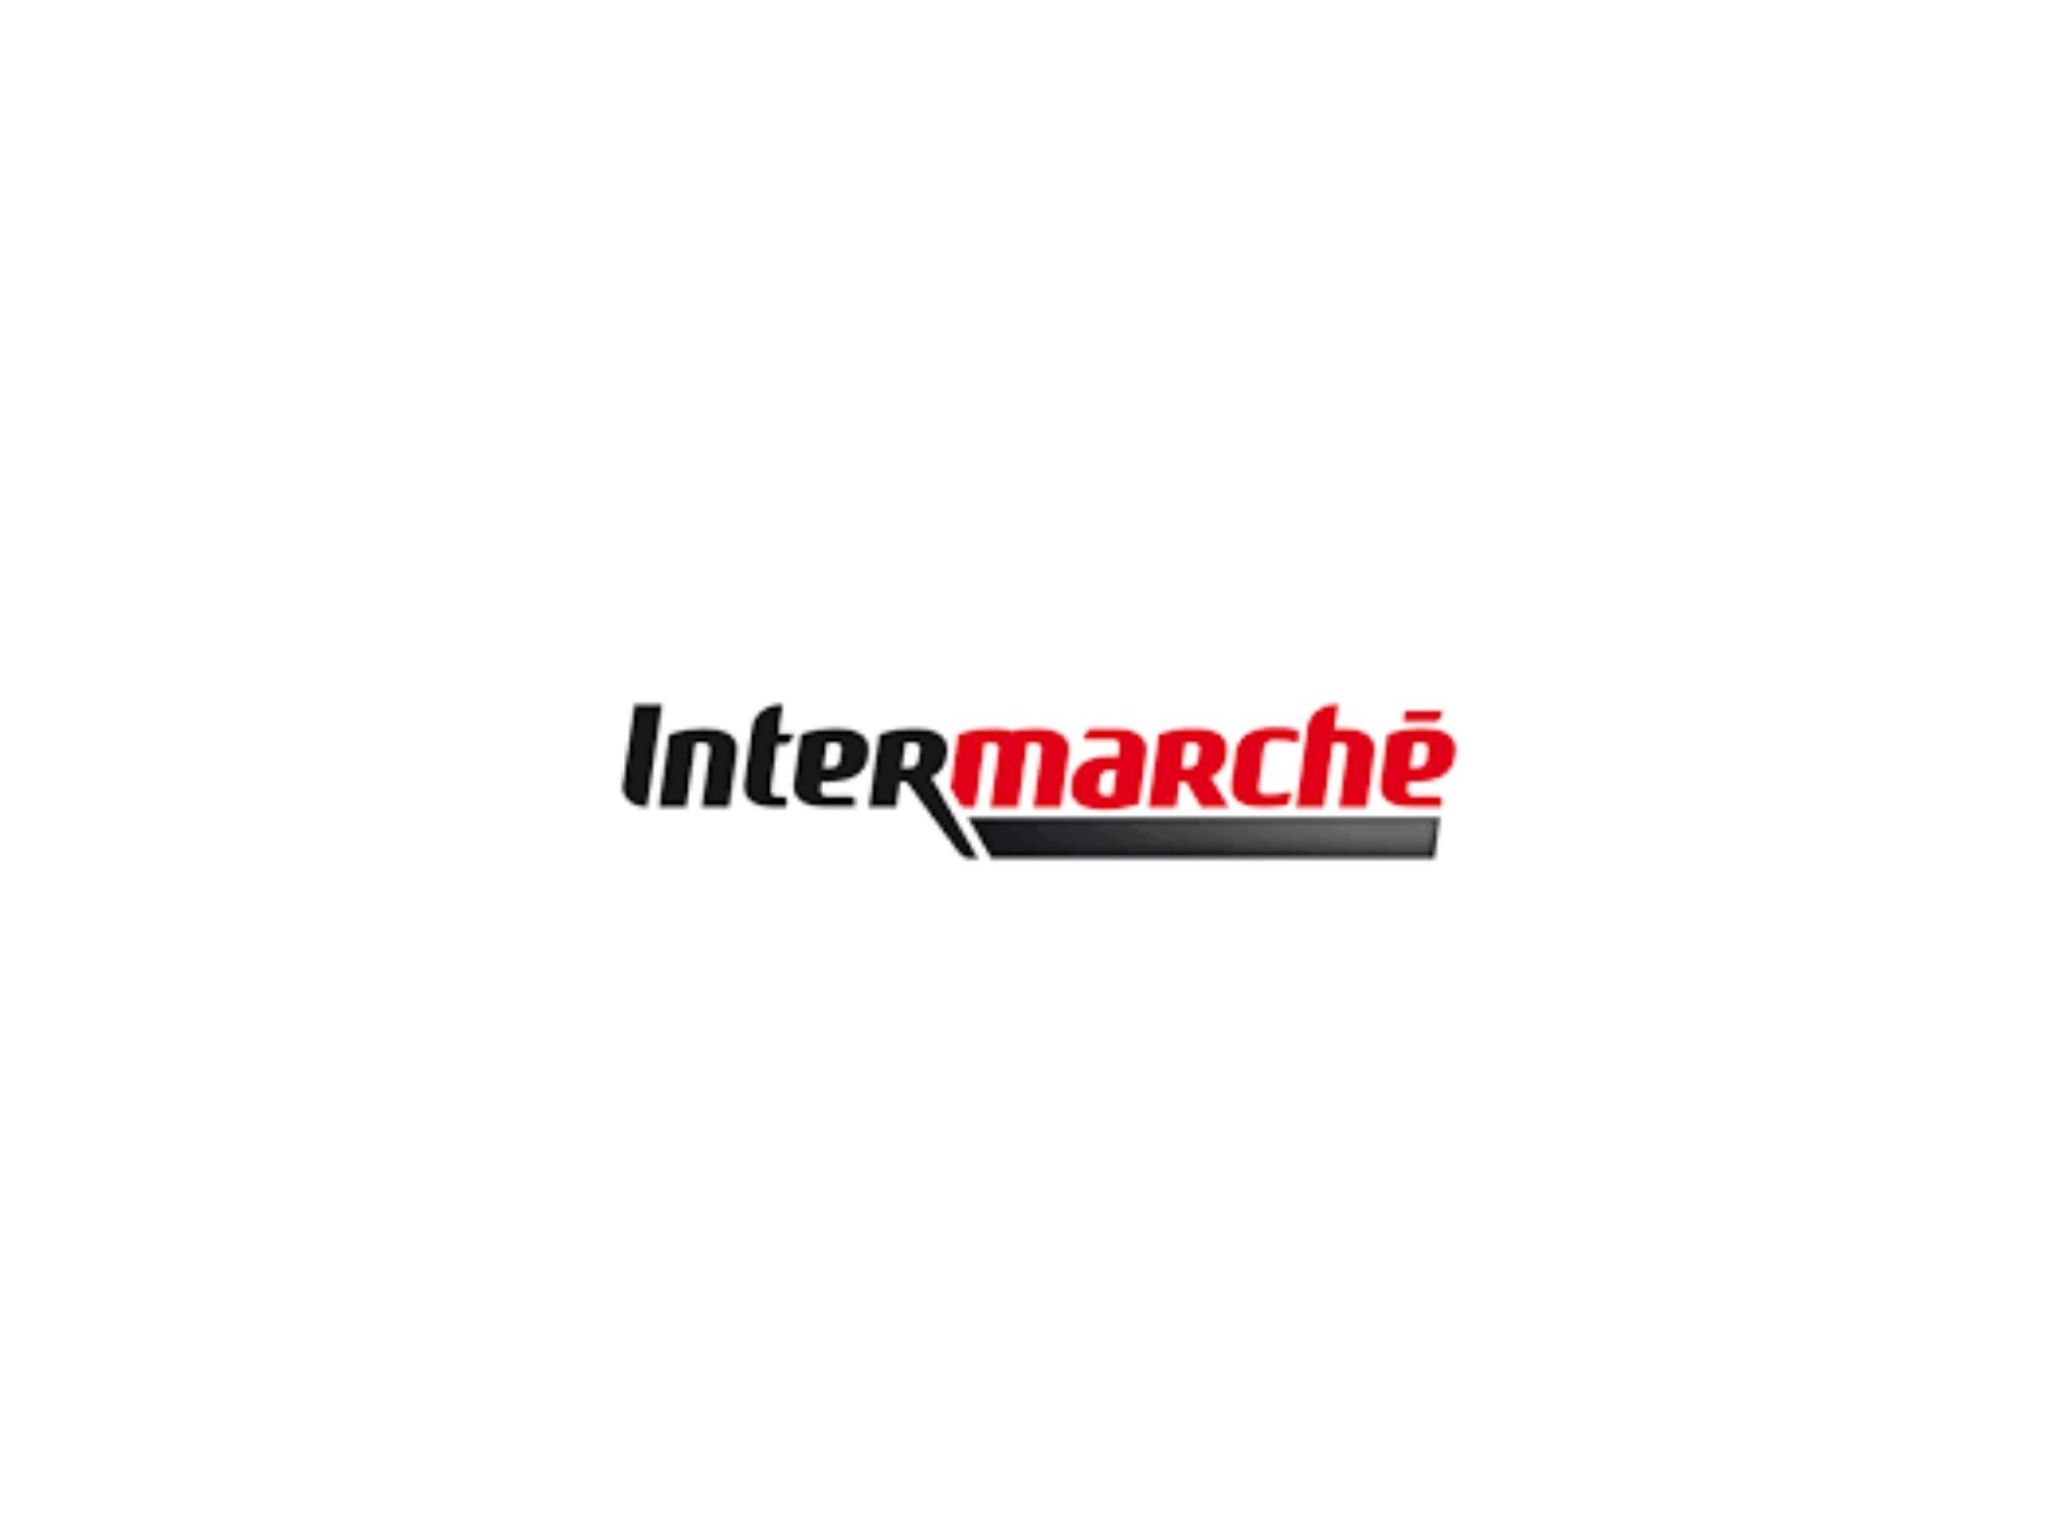  Logo Intermarché